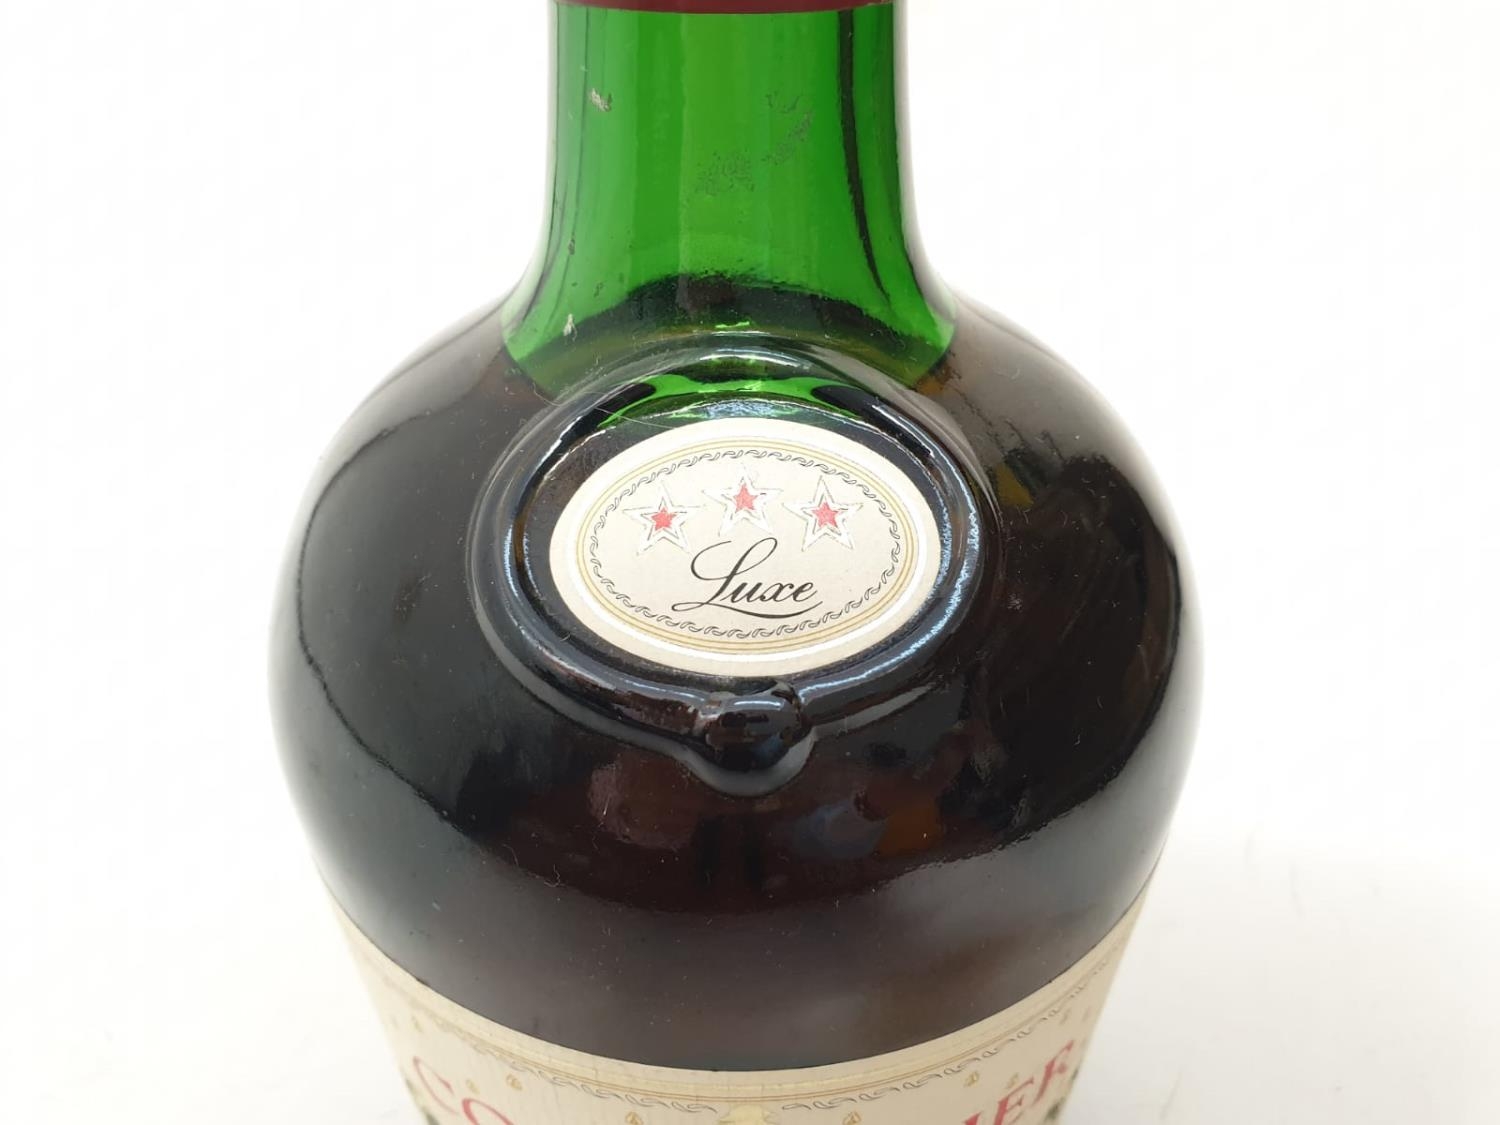 A bottle of vintage Courvoisier cognac. - Image 5 of 8